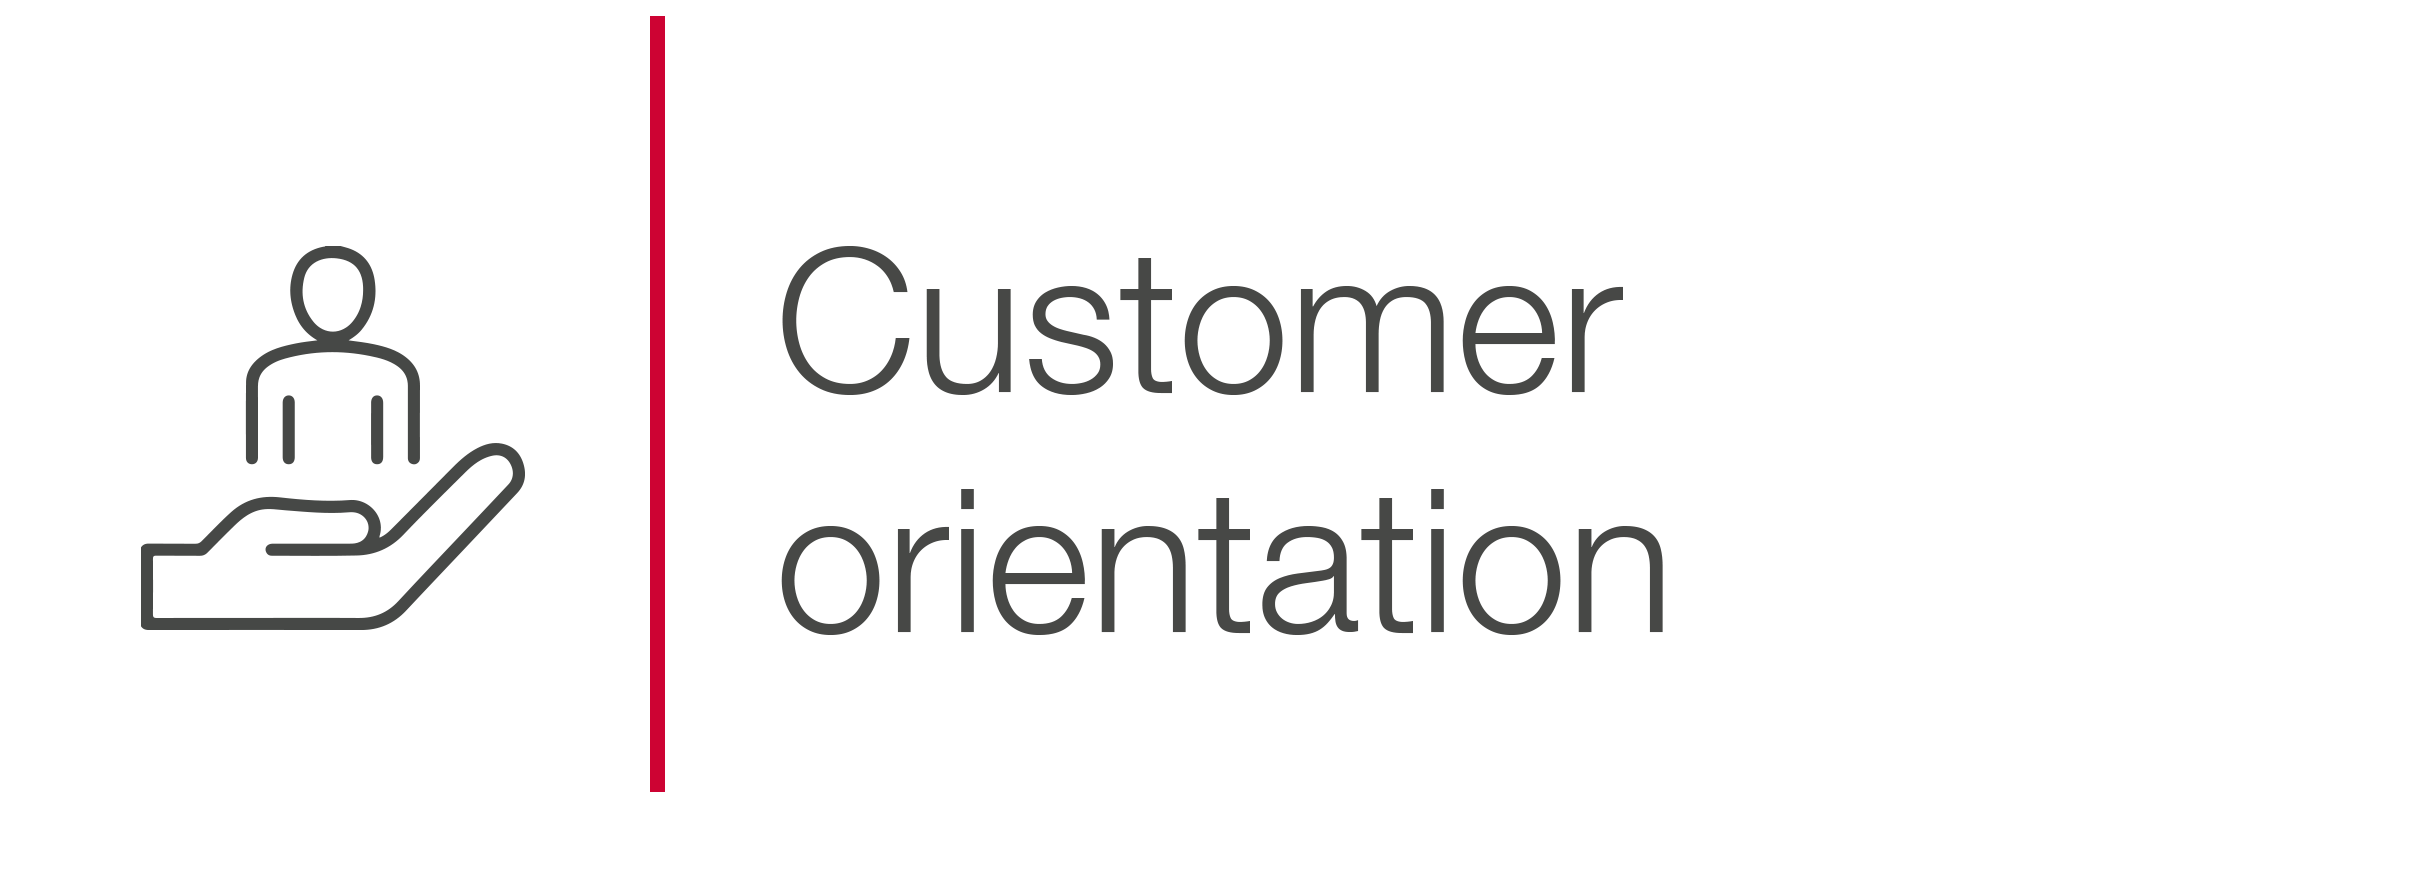 Customer orientation